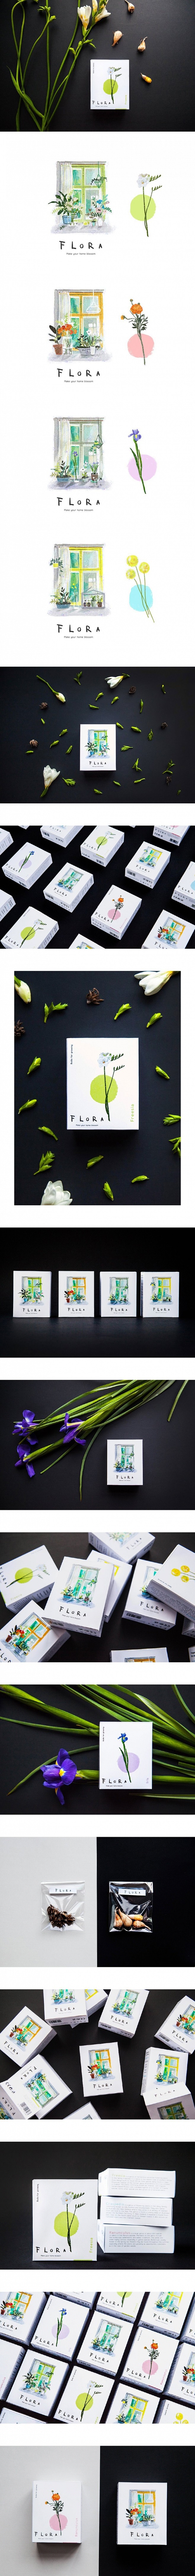 Flora品牌包装设计 设计圈 展示 设...